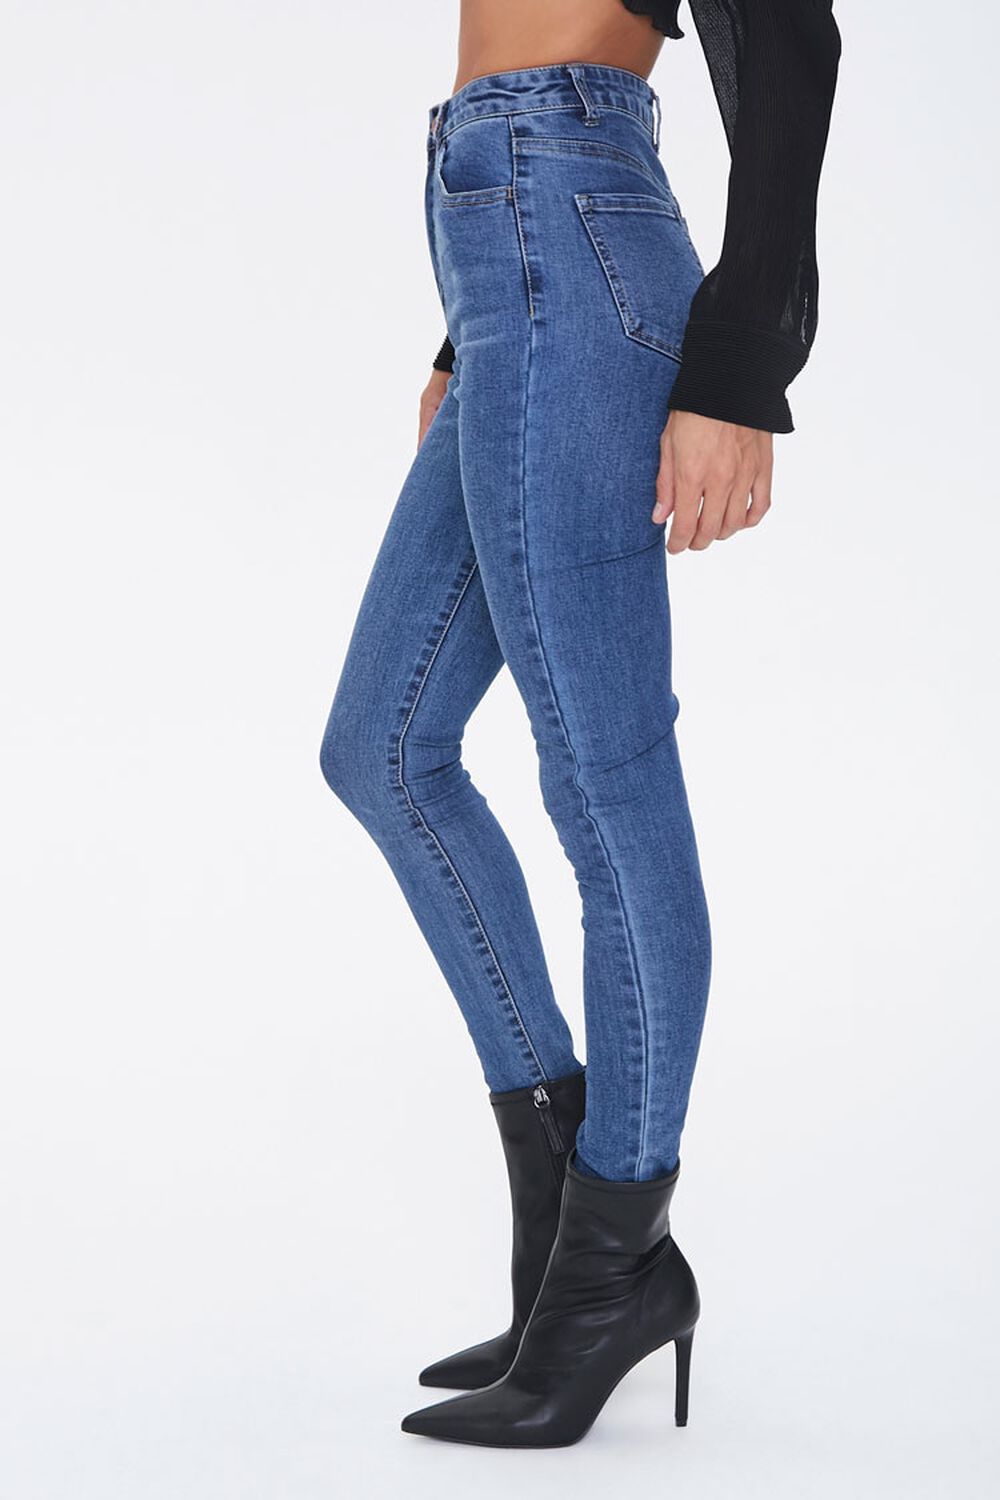 DARK DENIM High-Rise Skinny Jeans, image 3